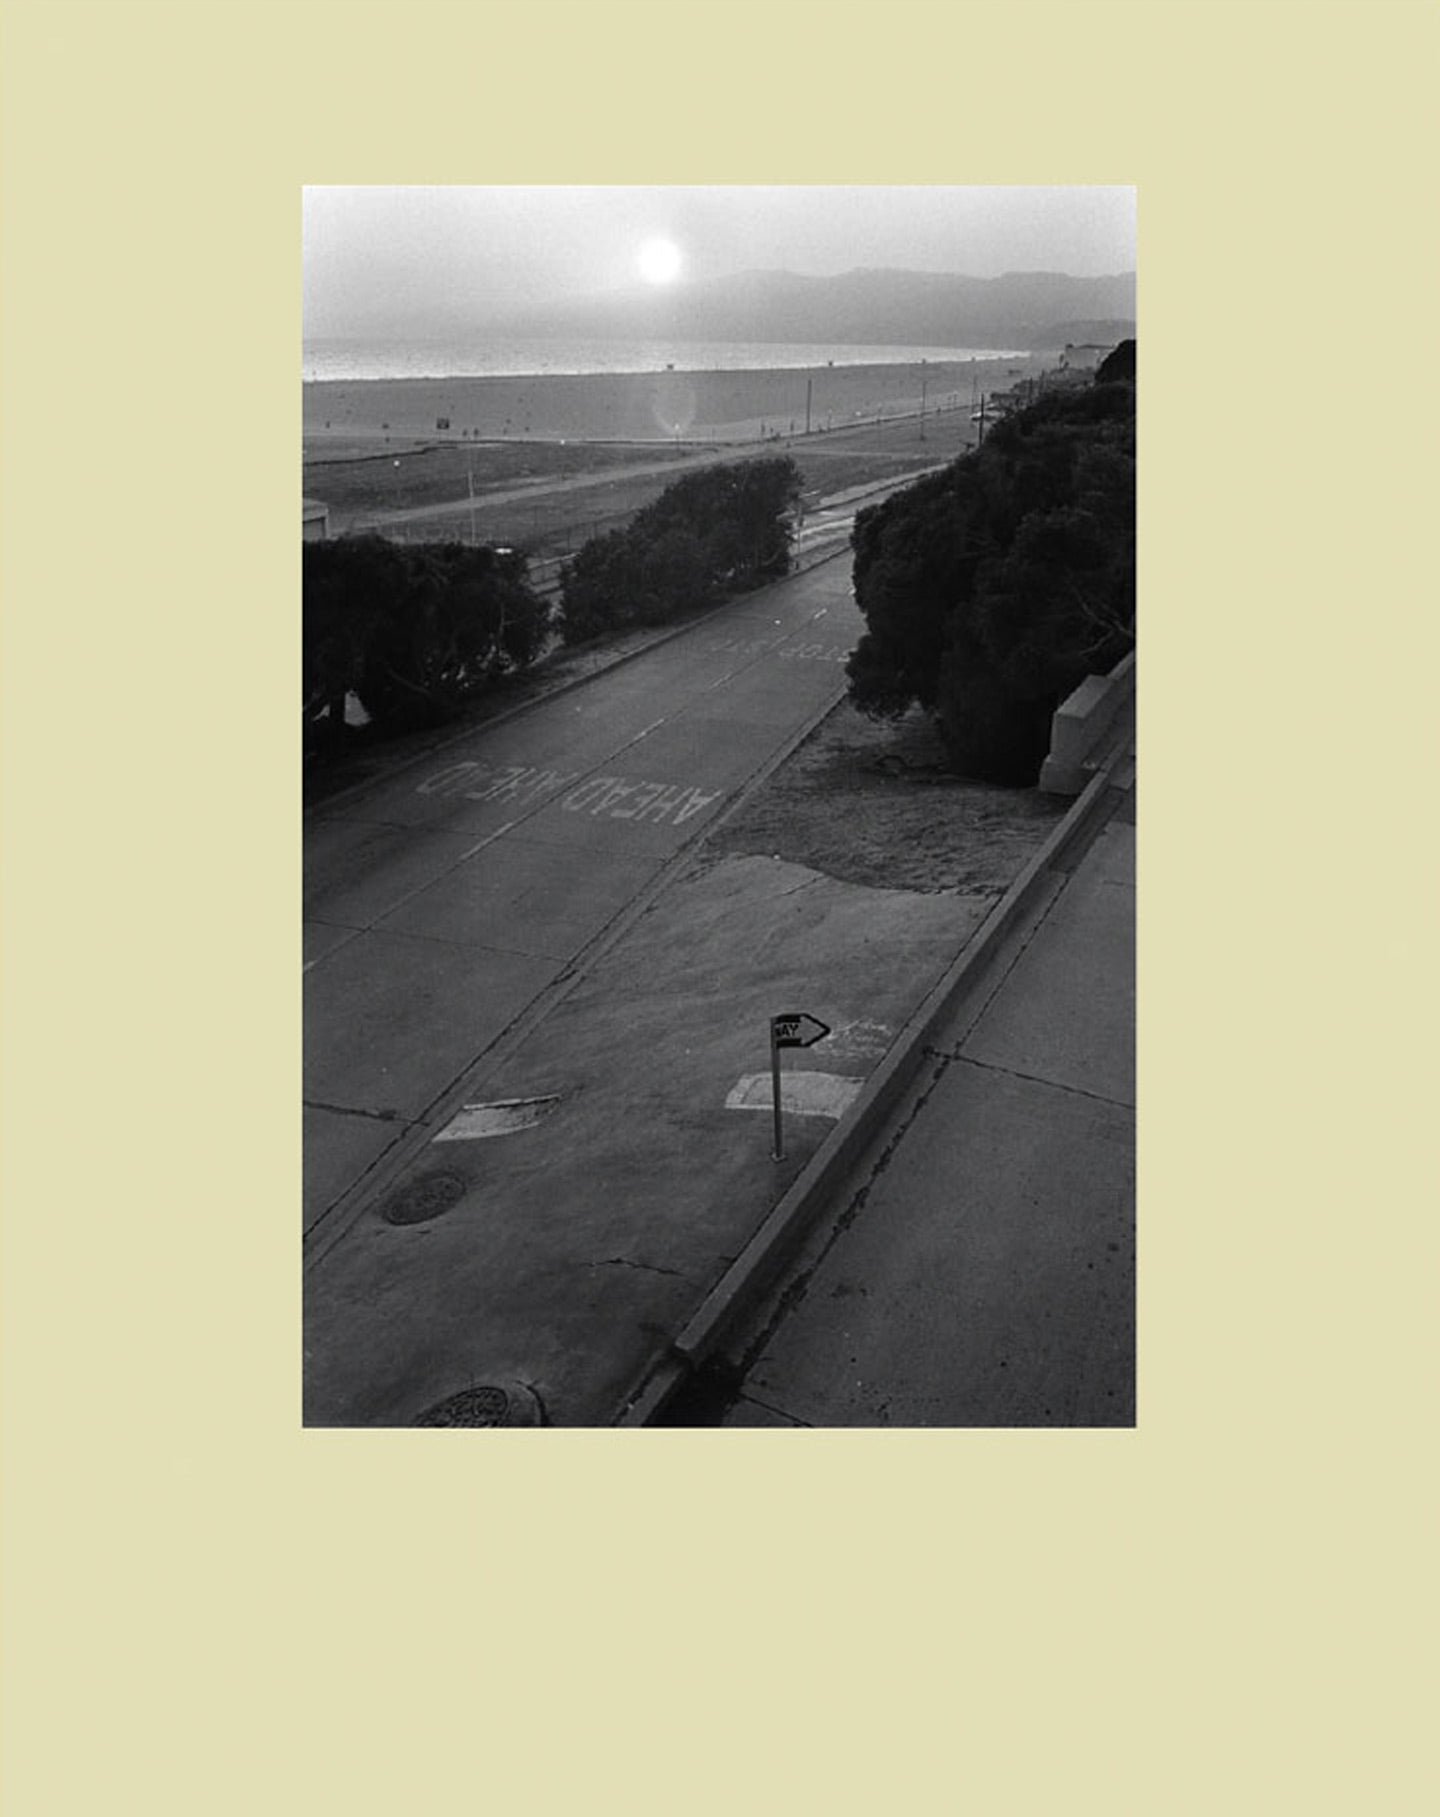 NZ Library: Set #2 (Six Volumes), Limited Edition [SIGNED]: Robbert Flick: LA Diary; Kazuo Kitai: Tsugaru / Shimokita; Philip Melnick: Nineteen Seventies California; John Schott: Mobile Homes 1975-1976; Toshio Shibata: Yodaka; Mark Steinmetz: Angel City West: Volume One (1)